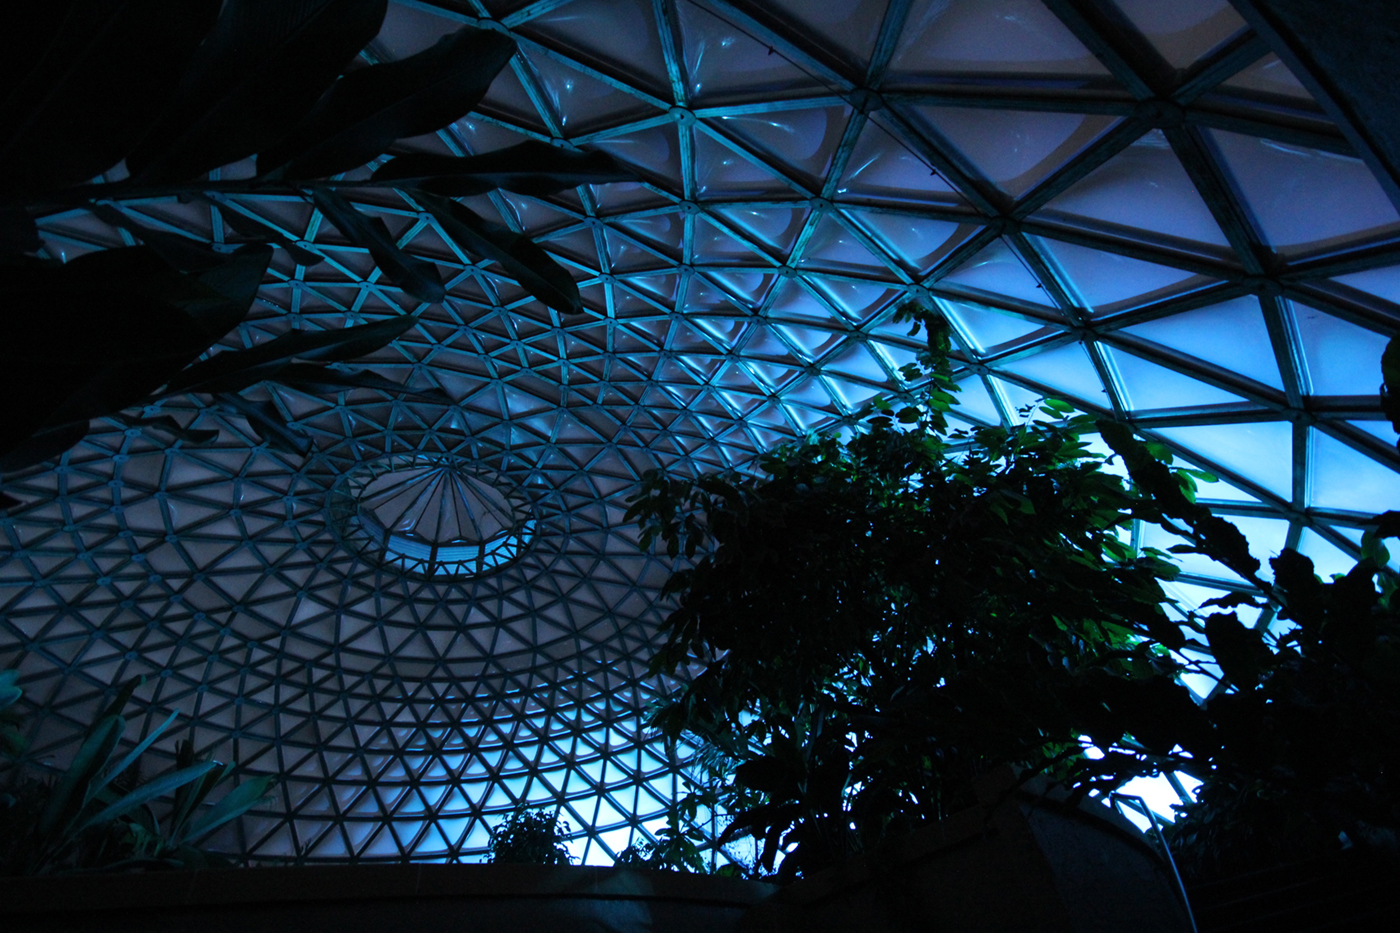 Mt Cootha Botanical Gardens Indoor LED Architectural Building Lighting